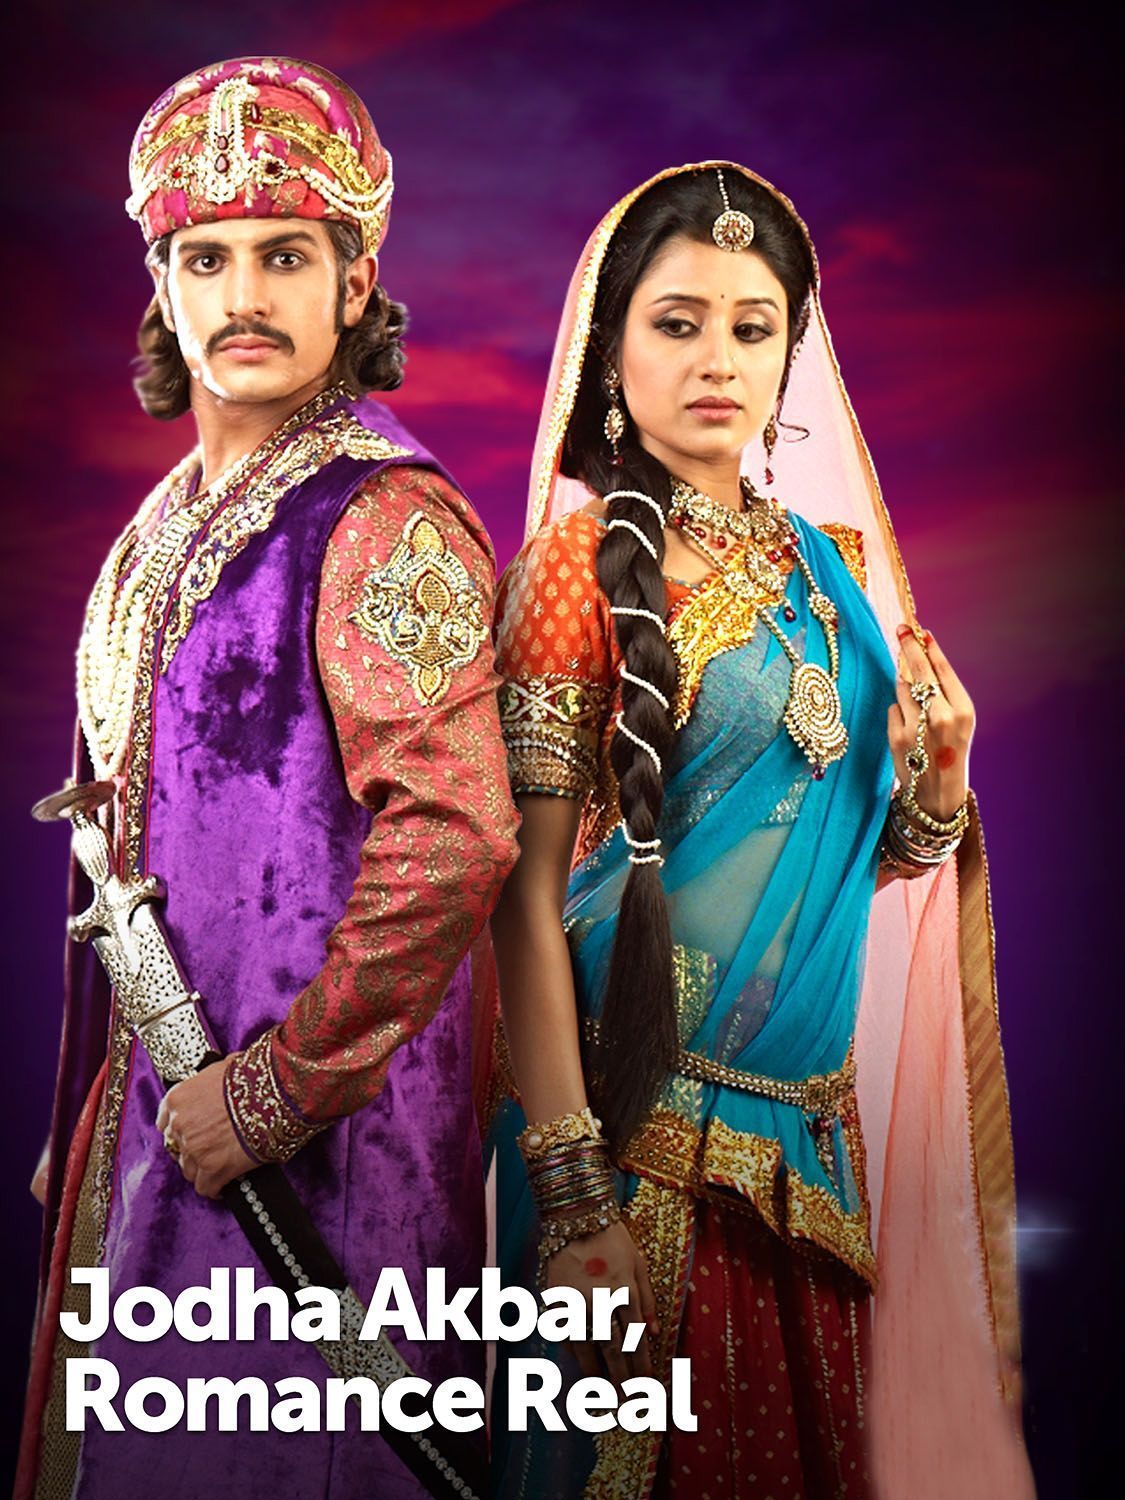 Jodha Akbar Cast and Characters